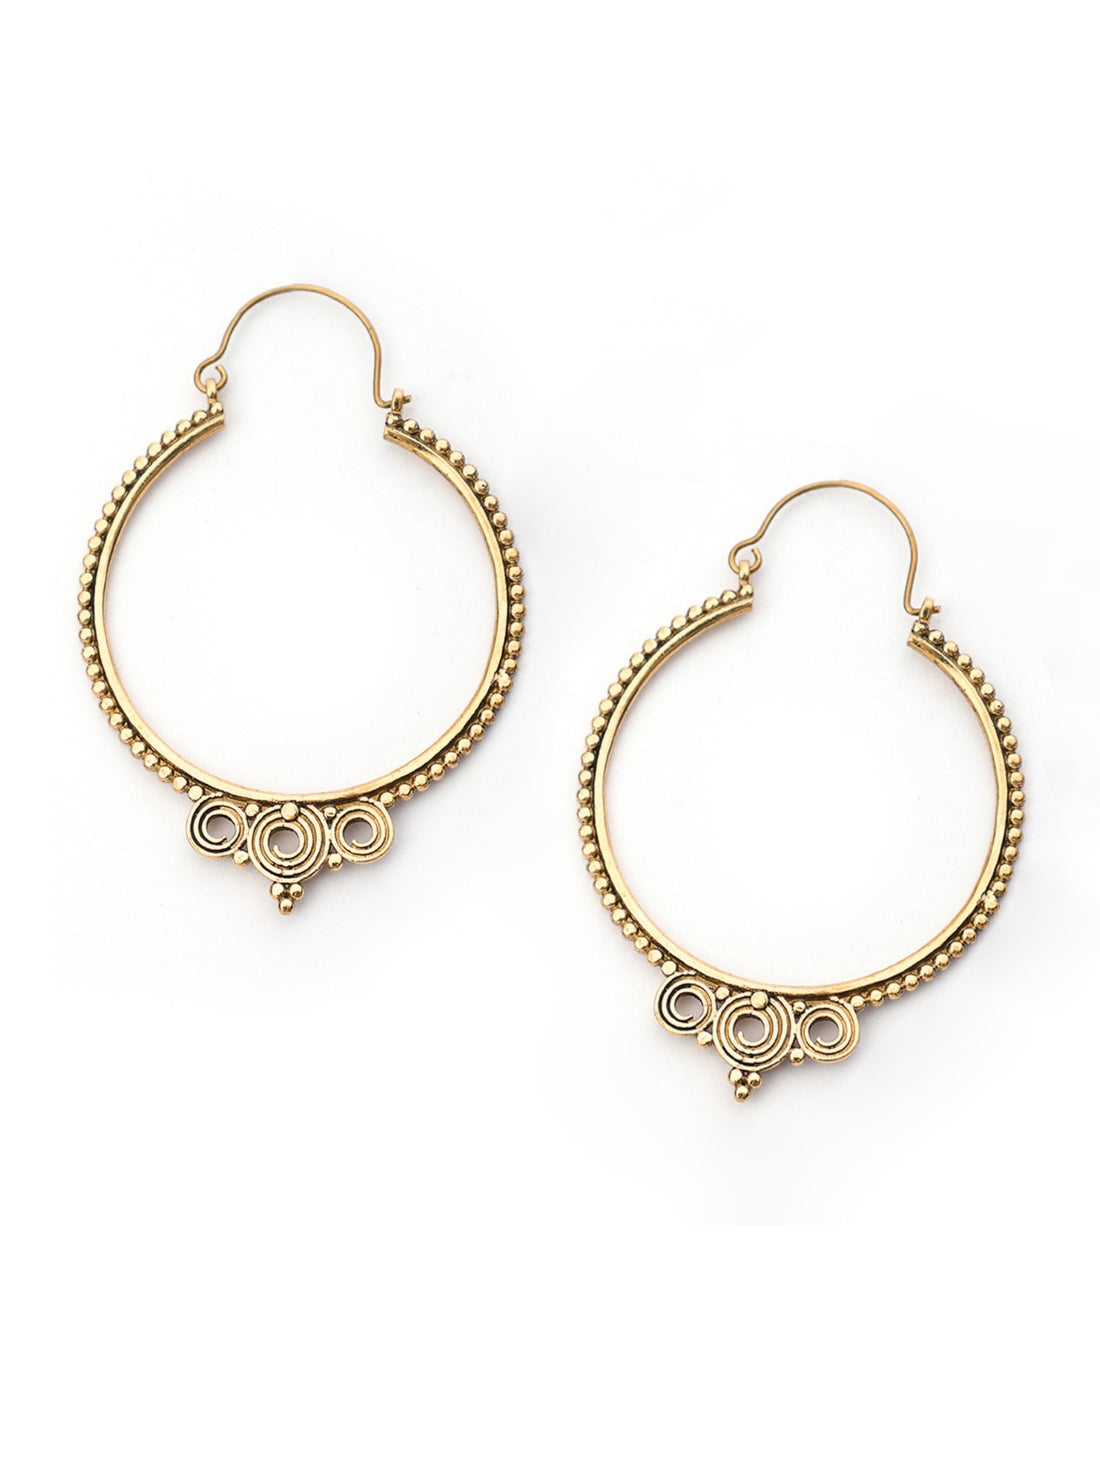 Daily Wear Hoops Earrings - Traditional Gold-Plated Brass Earrings By Studio One Love